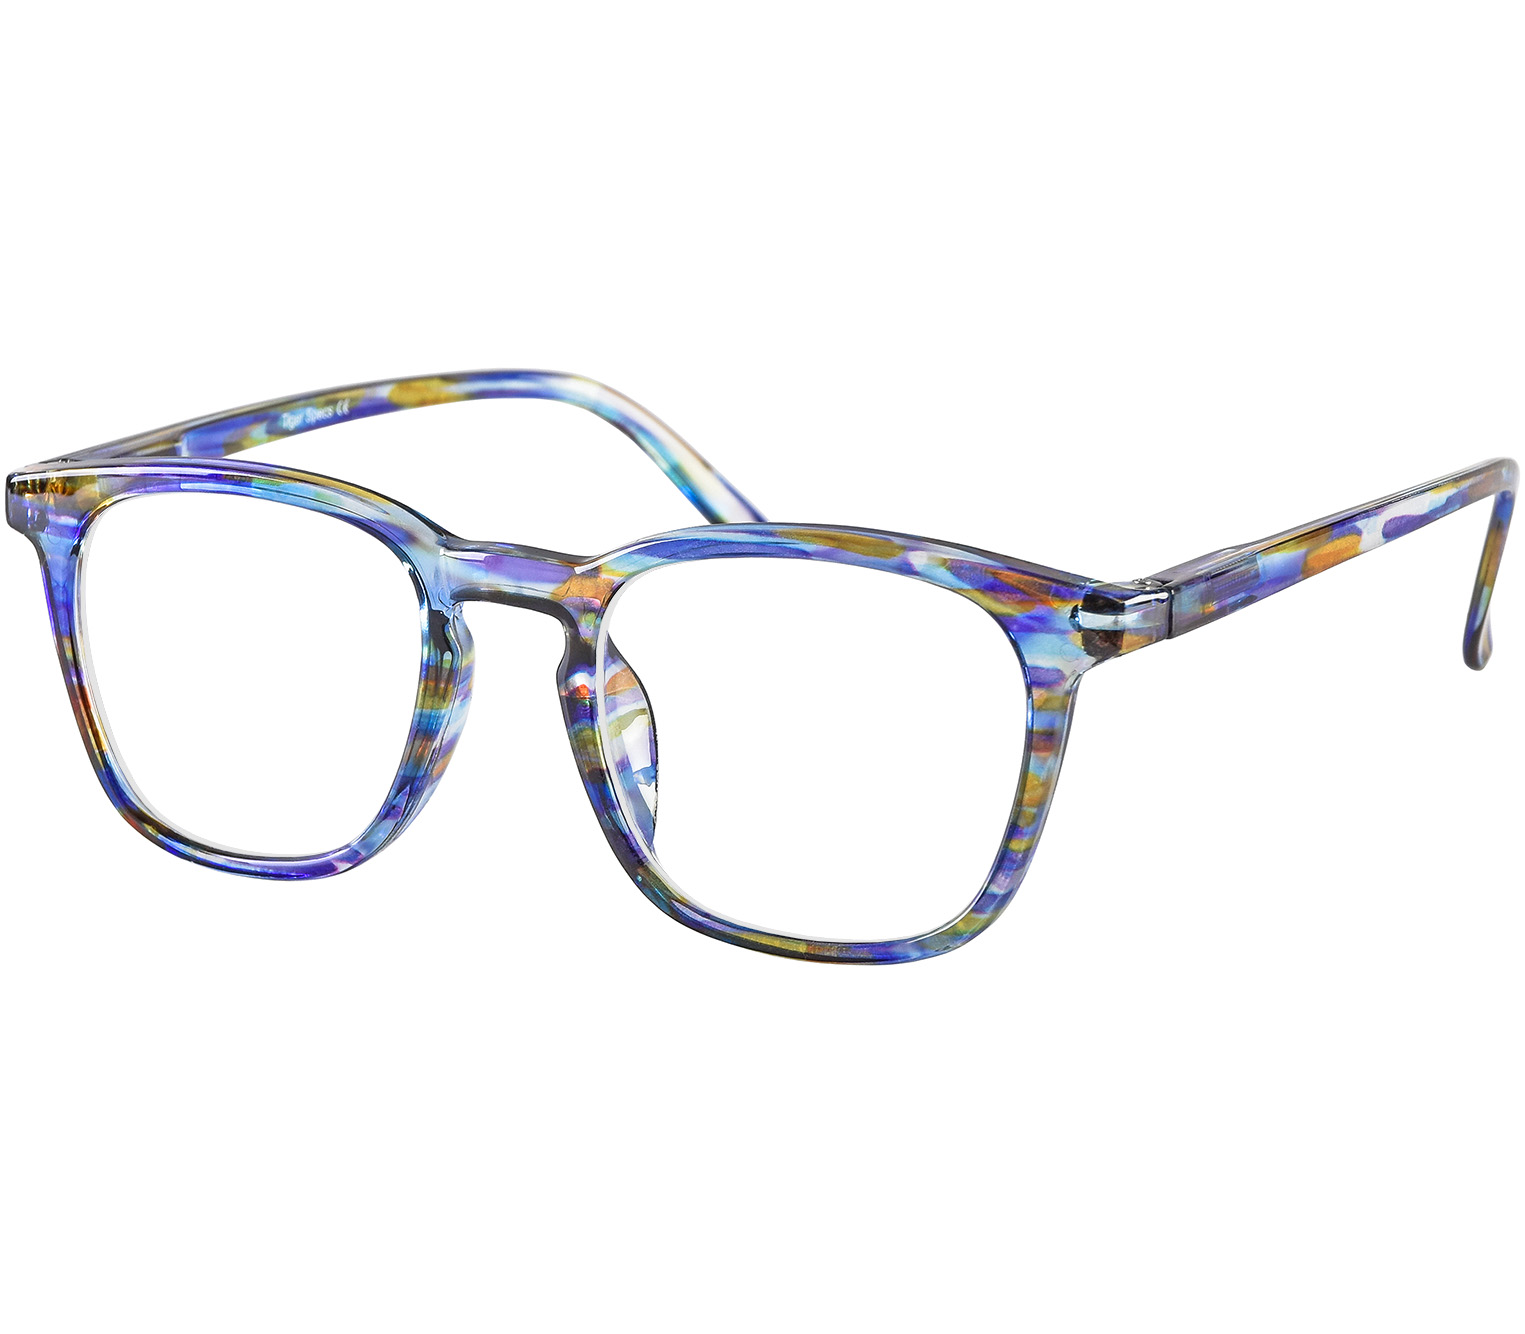 Main Image (Angle) - Scholar (Multi-coloured) Retro Reading Glasses